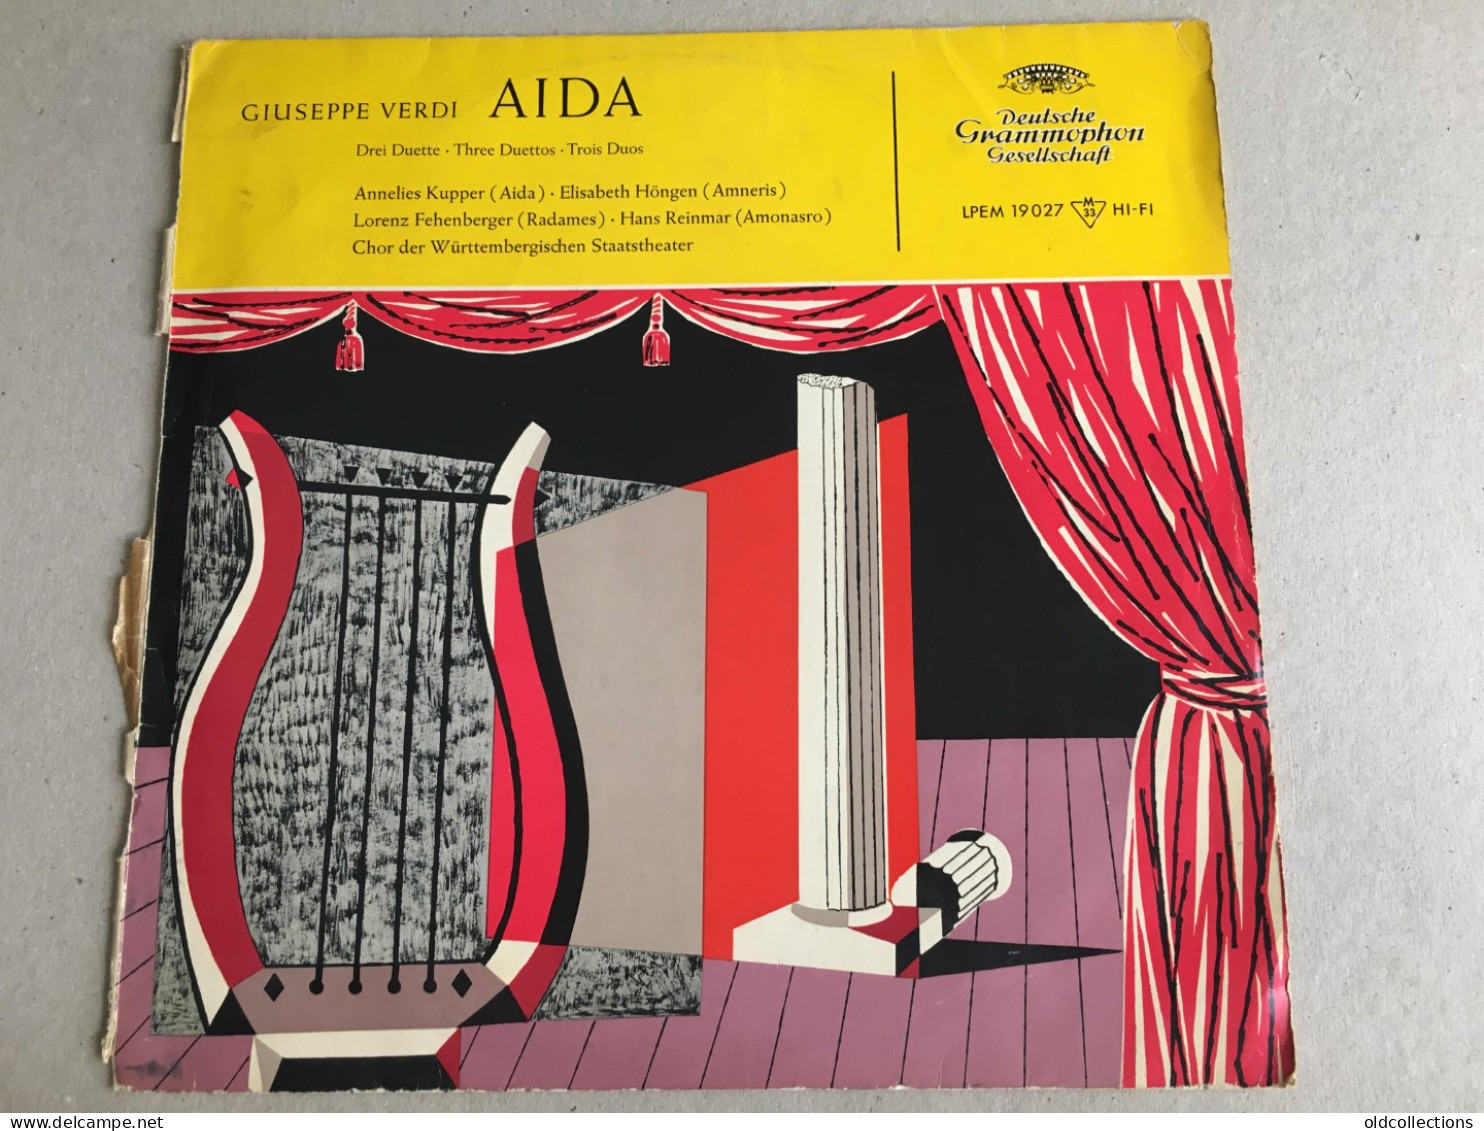 Schallplatte Vinyl Record Disque Vinyle LP Record - Giuseppe Verdi Aida  - Opera / Operette